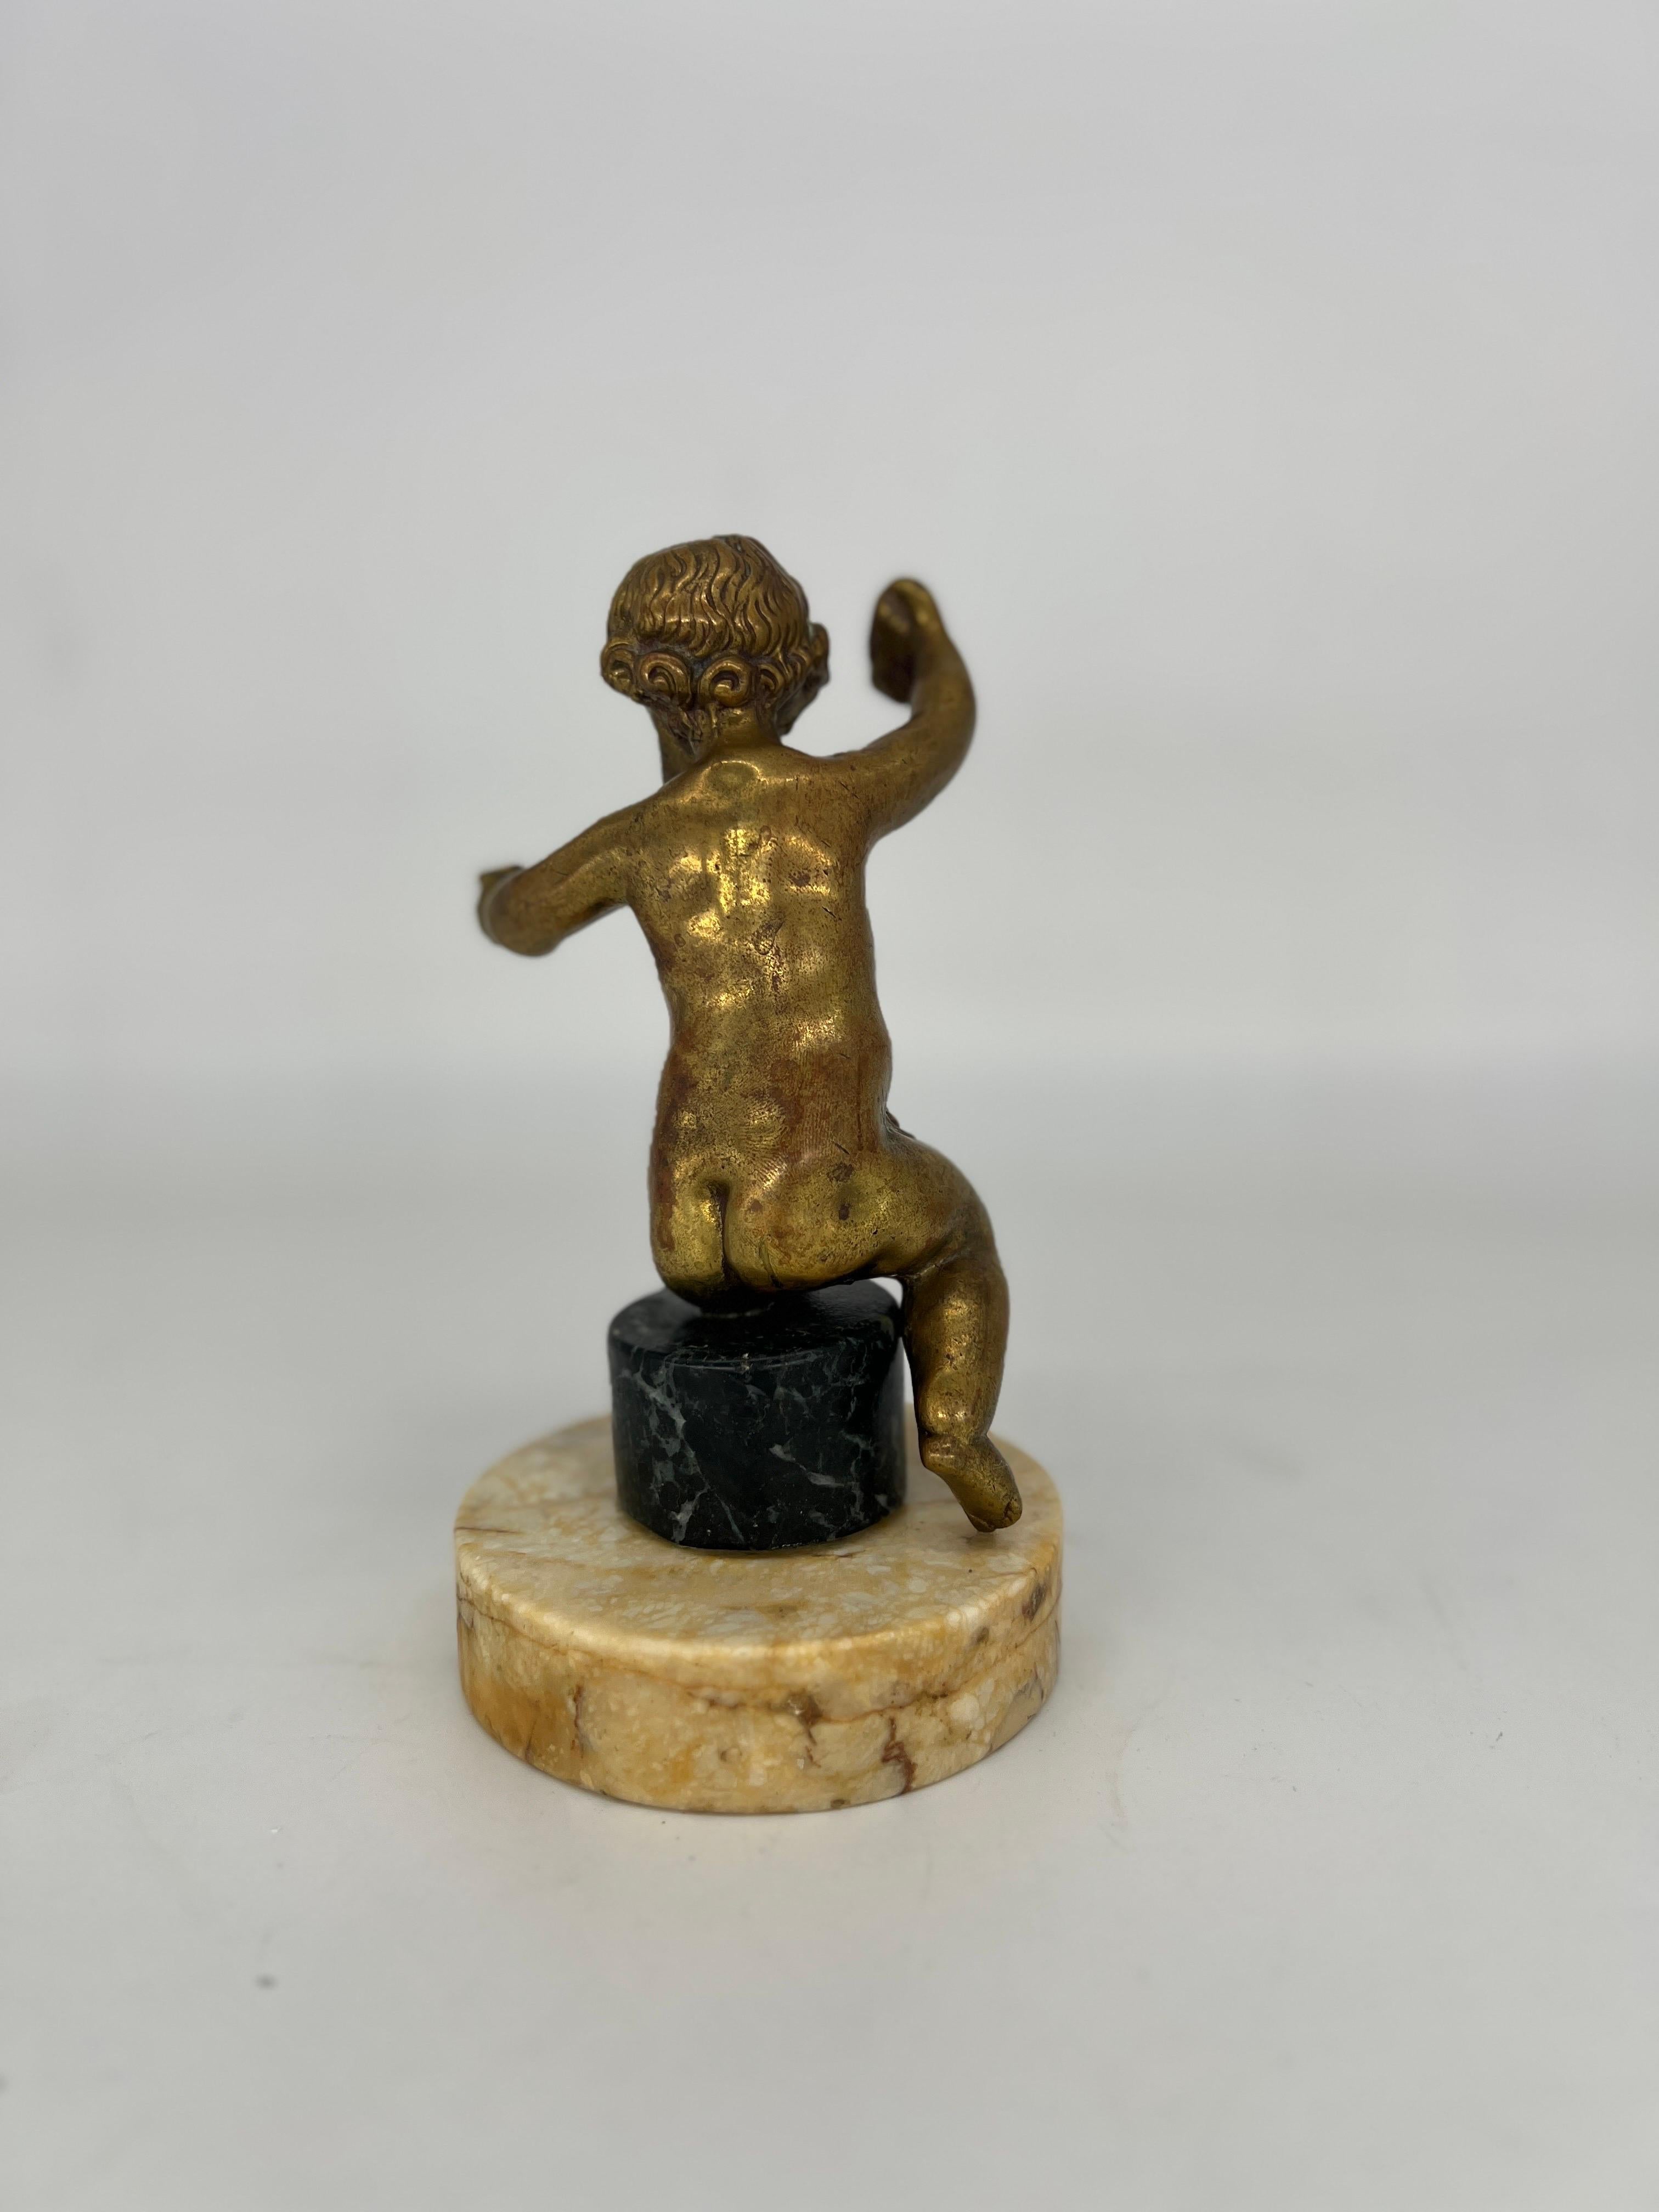 19th Century Antique French Gilt Bronze “Grapes into Wine” Cherub Statue Falconet Style For Sale